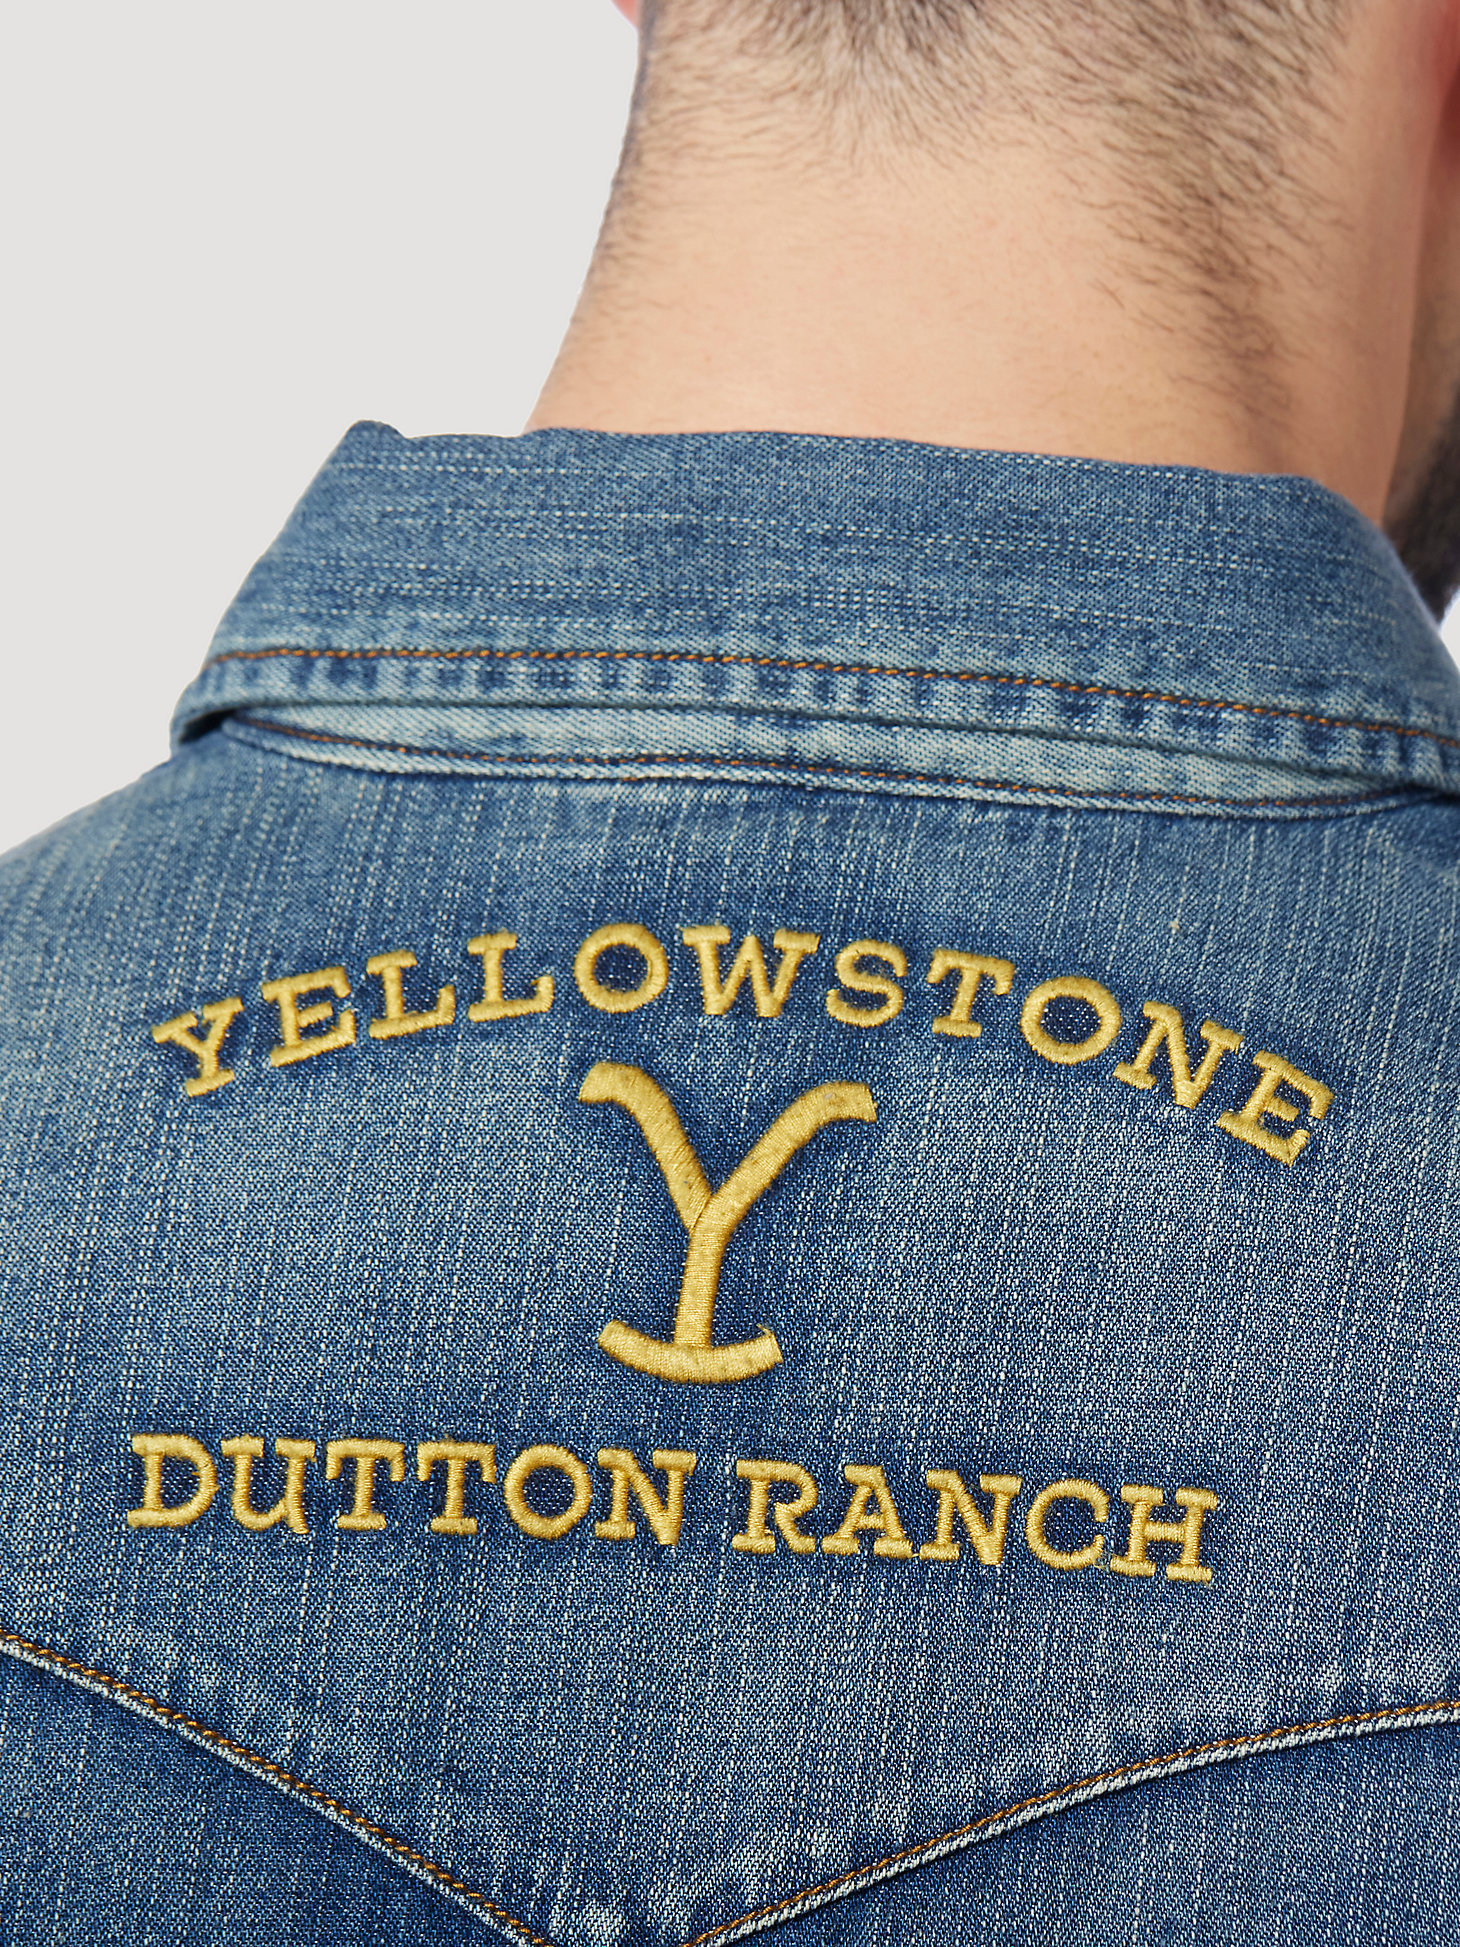 Wrangler x Yellowstone Men's Embroidered Denim Work Shirt in Tinted Medium Wash alternative view 6